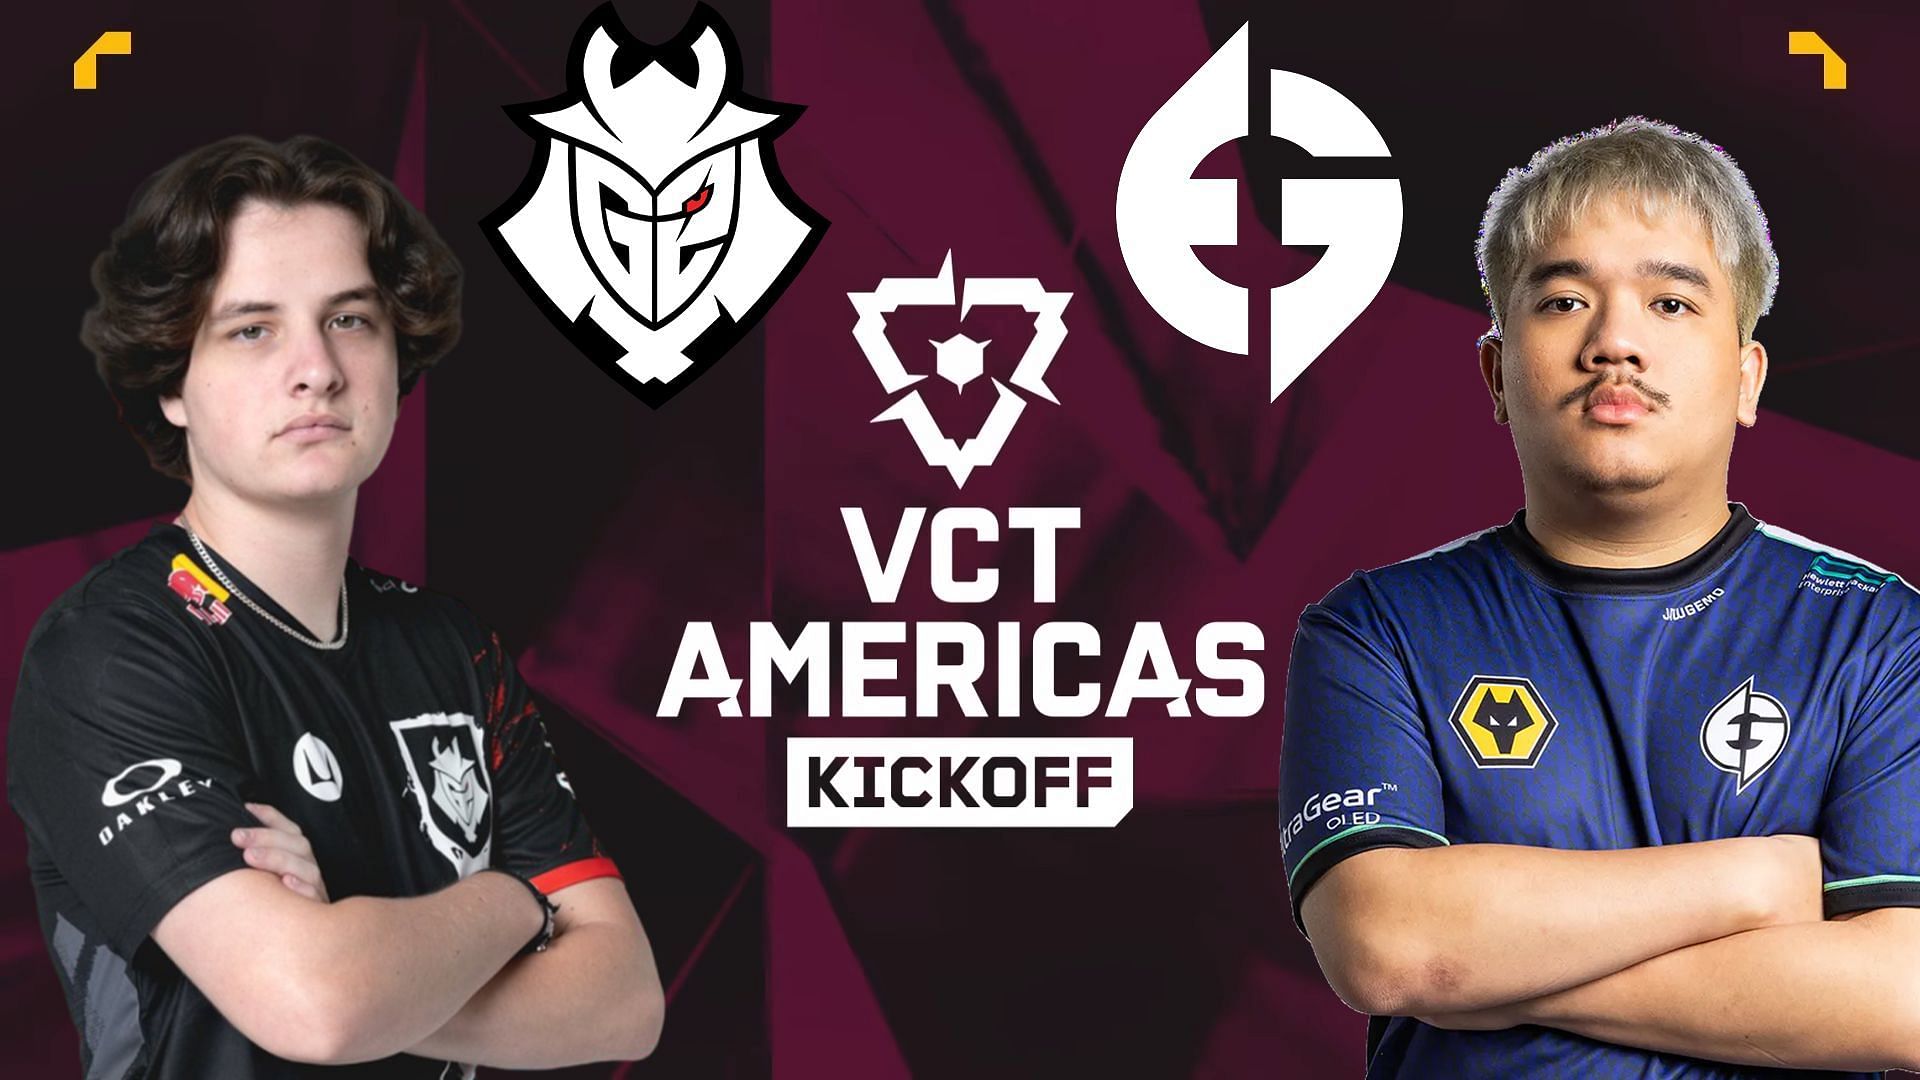 G2 Esports vs Evil Geniuses at VCT Americas Kickoff (Image via Riot Games || G2 Esports || Evil Geniuses))